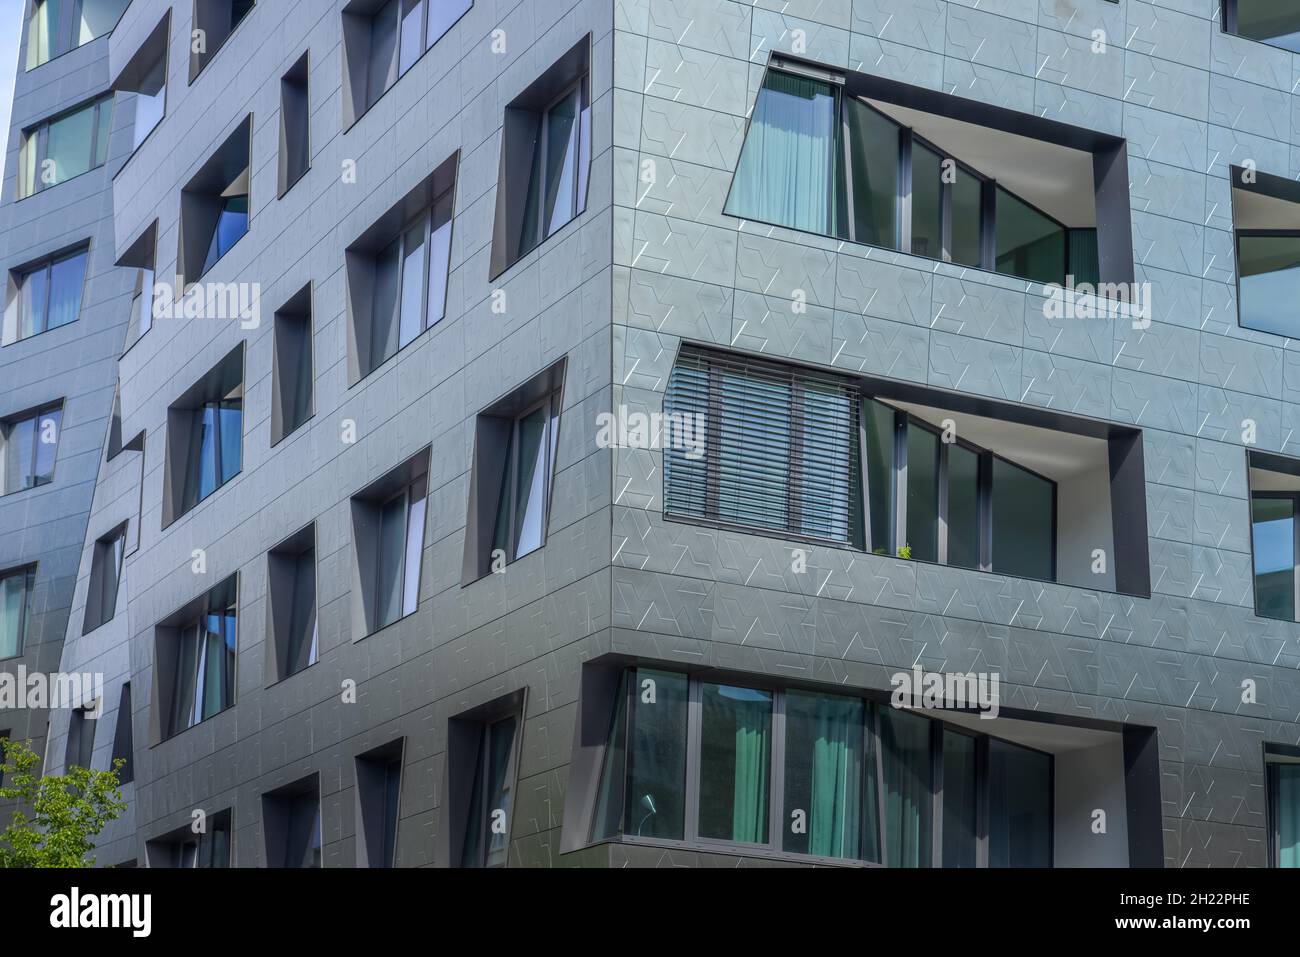 Nouveau bâtiment Daniel Libeskind, Chausseestrasse, Schwartzkopffstrasse, Mitte, Berlin,Allemagne Banque D'Images